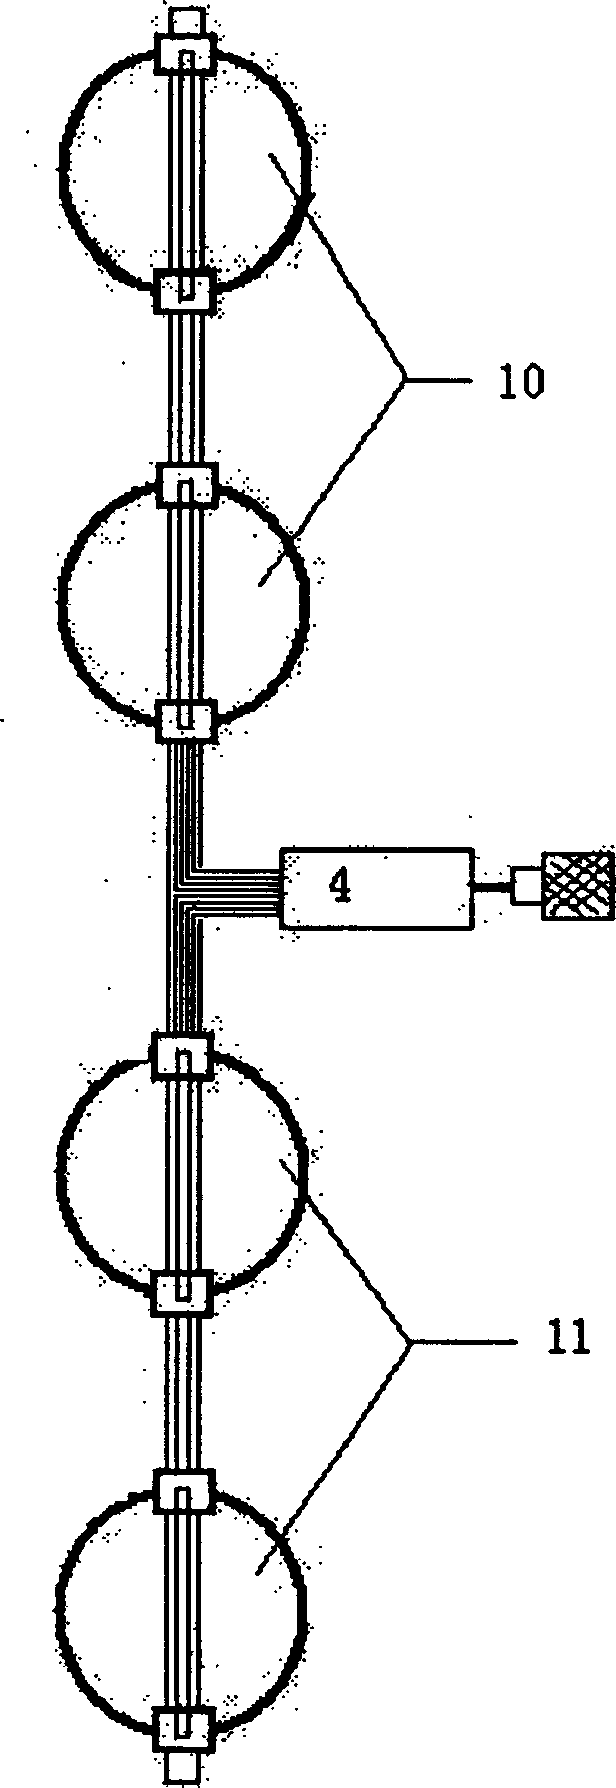 Orthogonal ring antenna